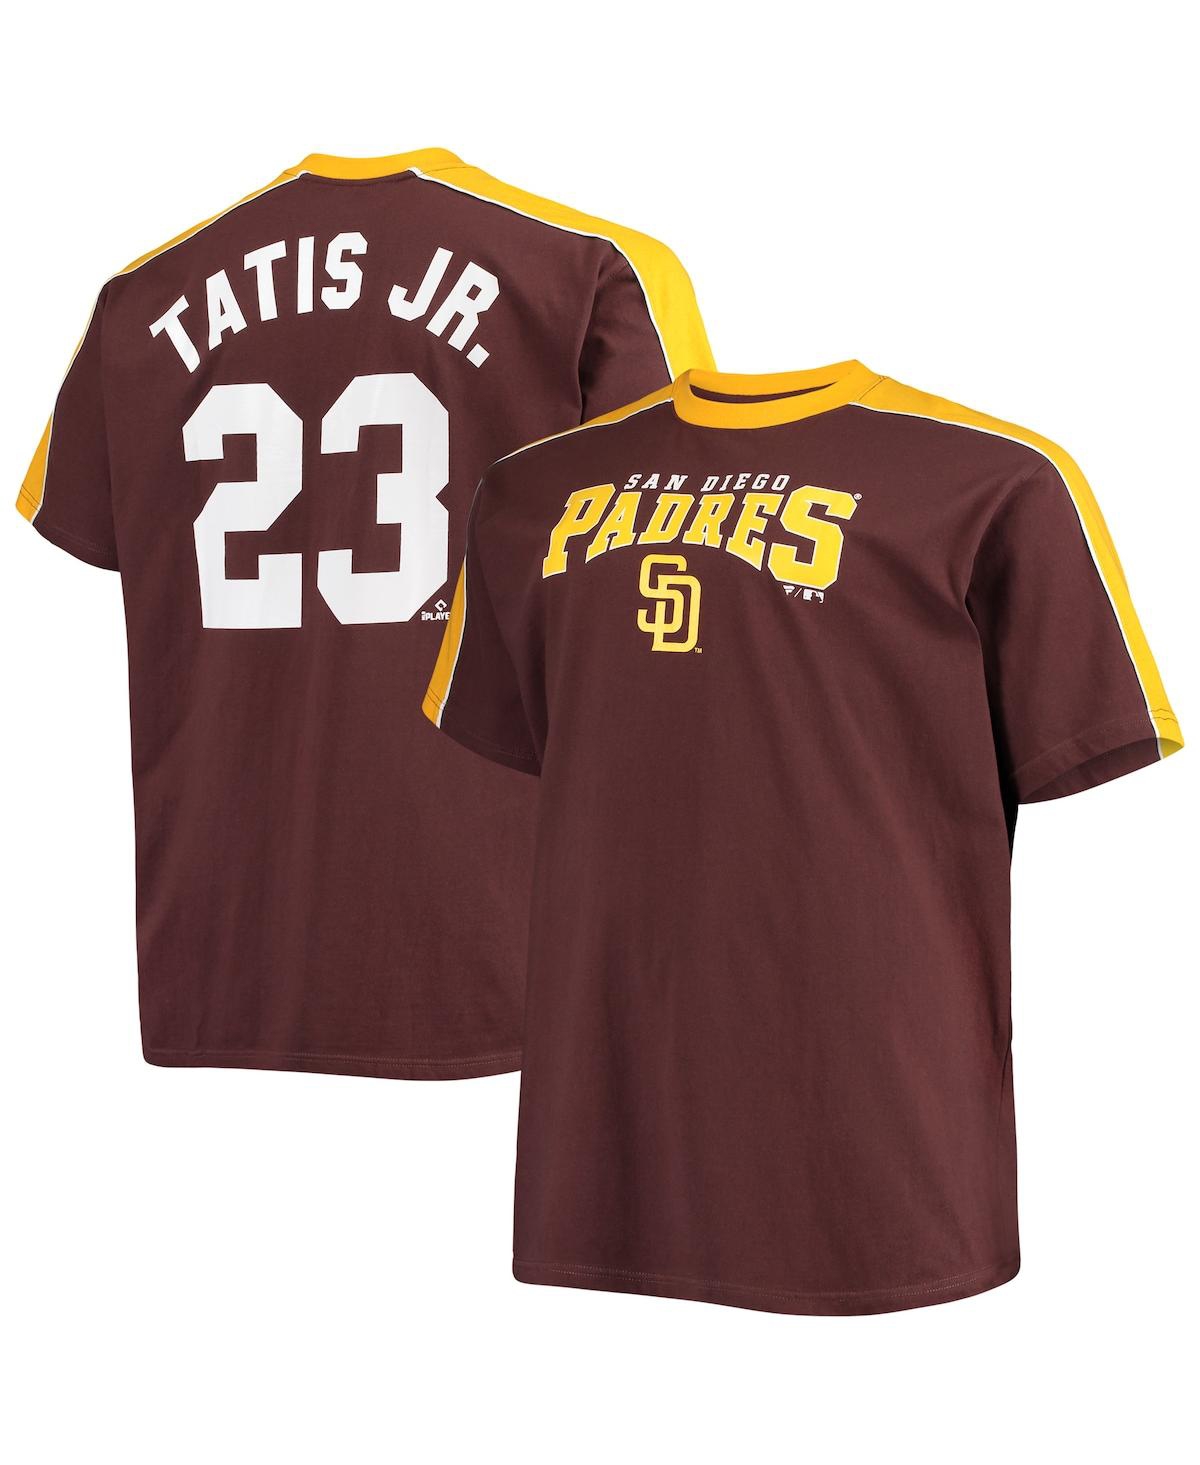 Men's Fernando Tatis Jr. Brown, Gold San Diego Padres Big and Tall Fashion Piping Player T-shirt - Brown, Gold